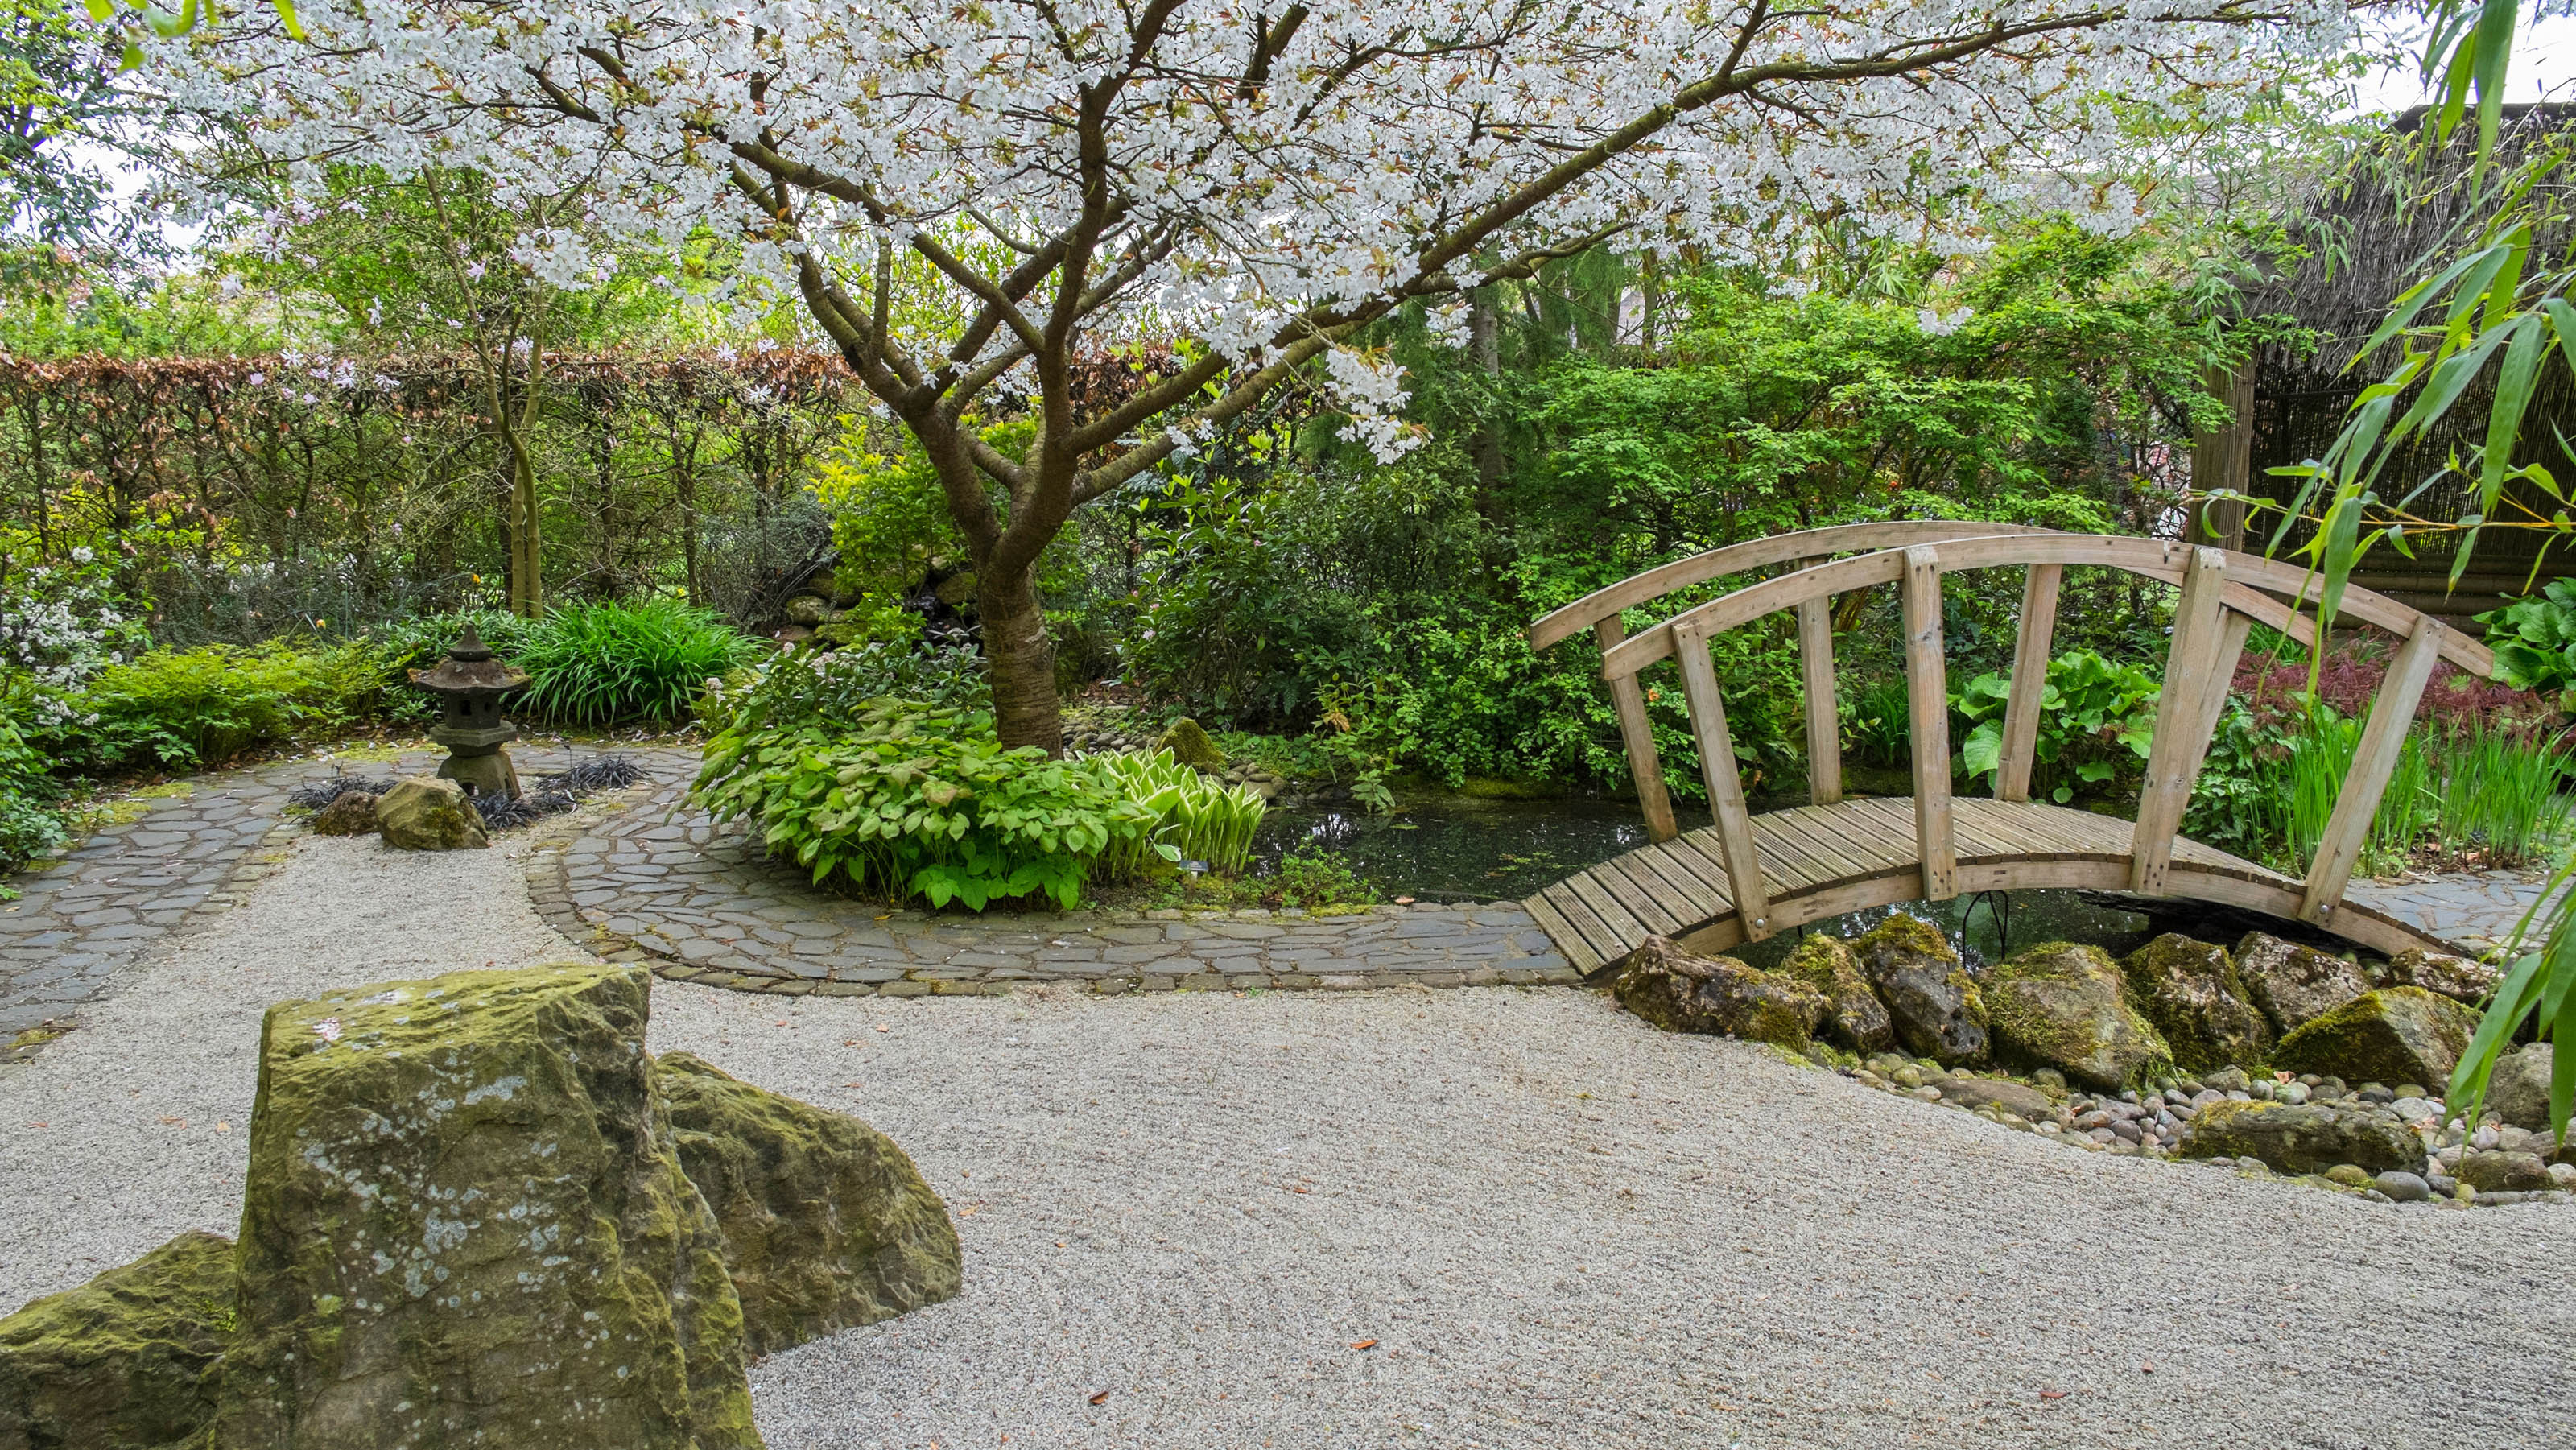 Zen garden ideas: 11 ways to create a calming, Japanese-inspired landscape